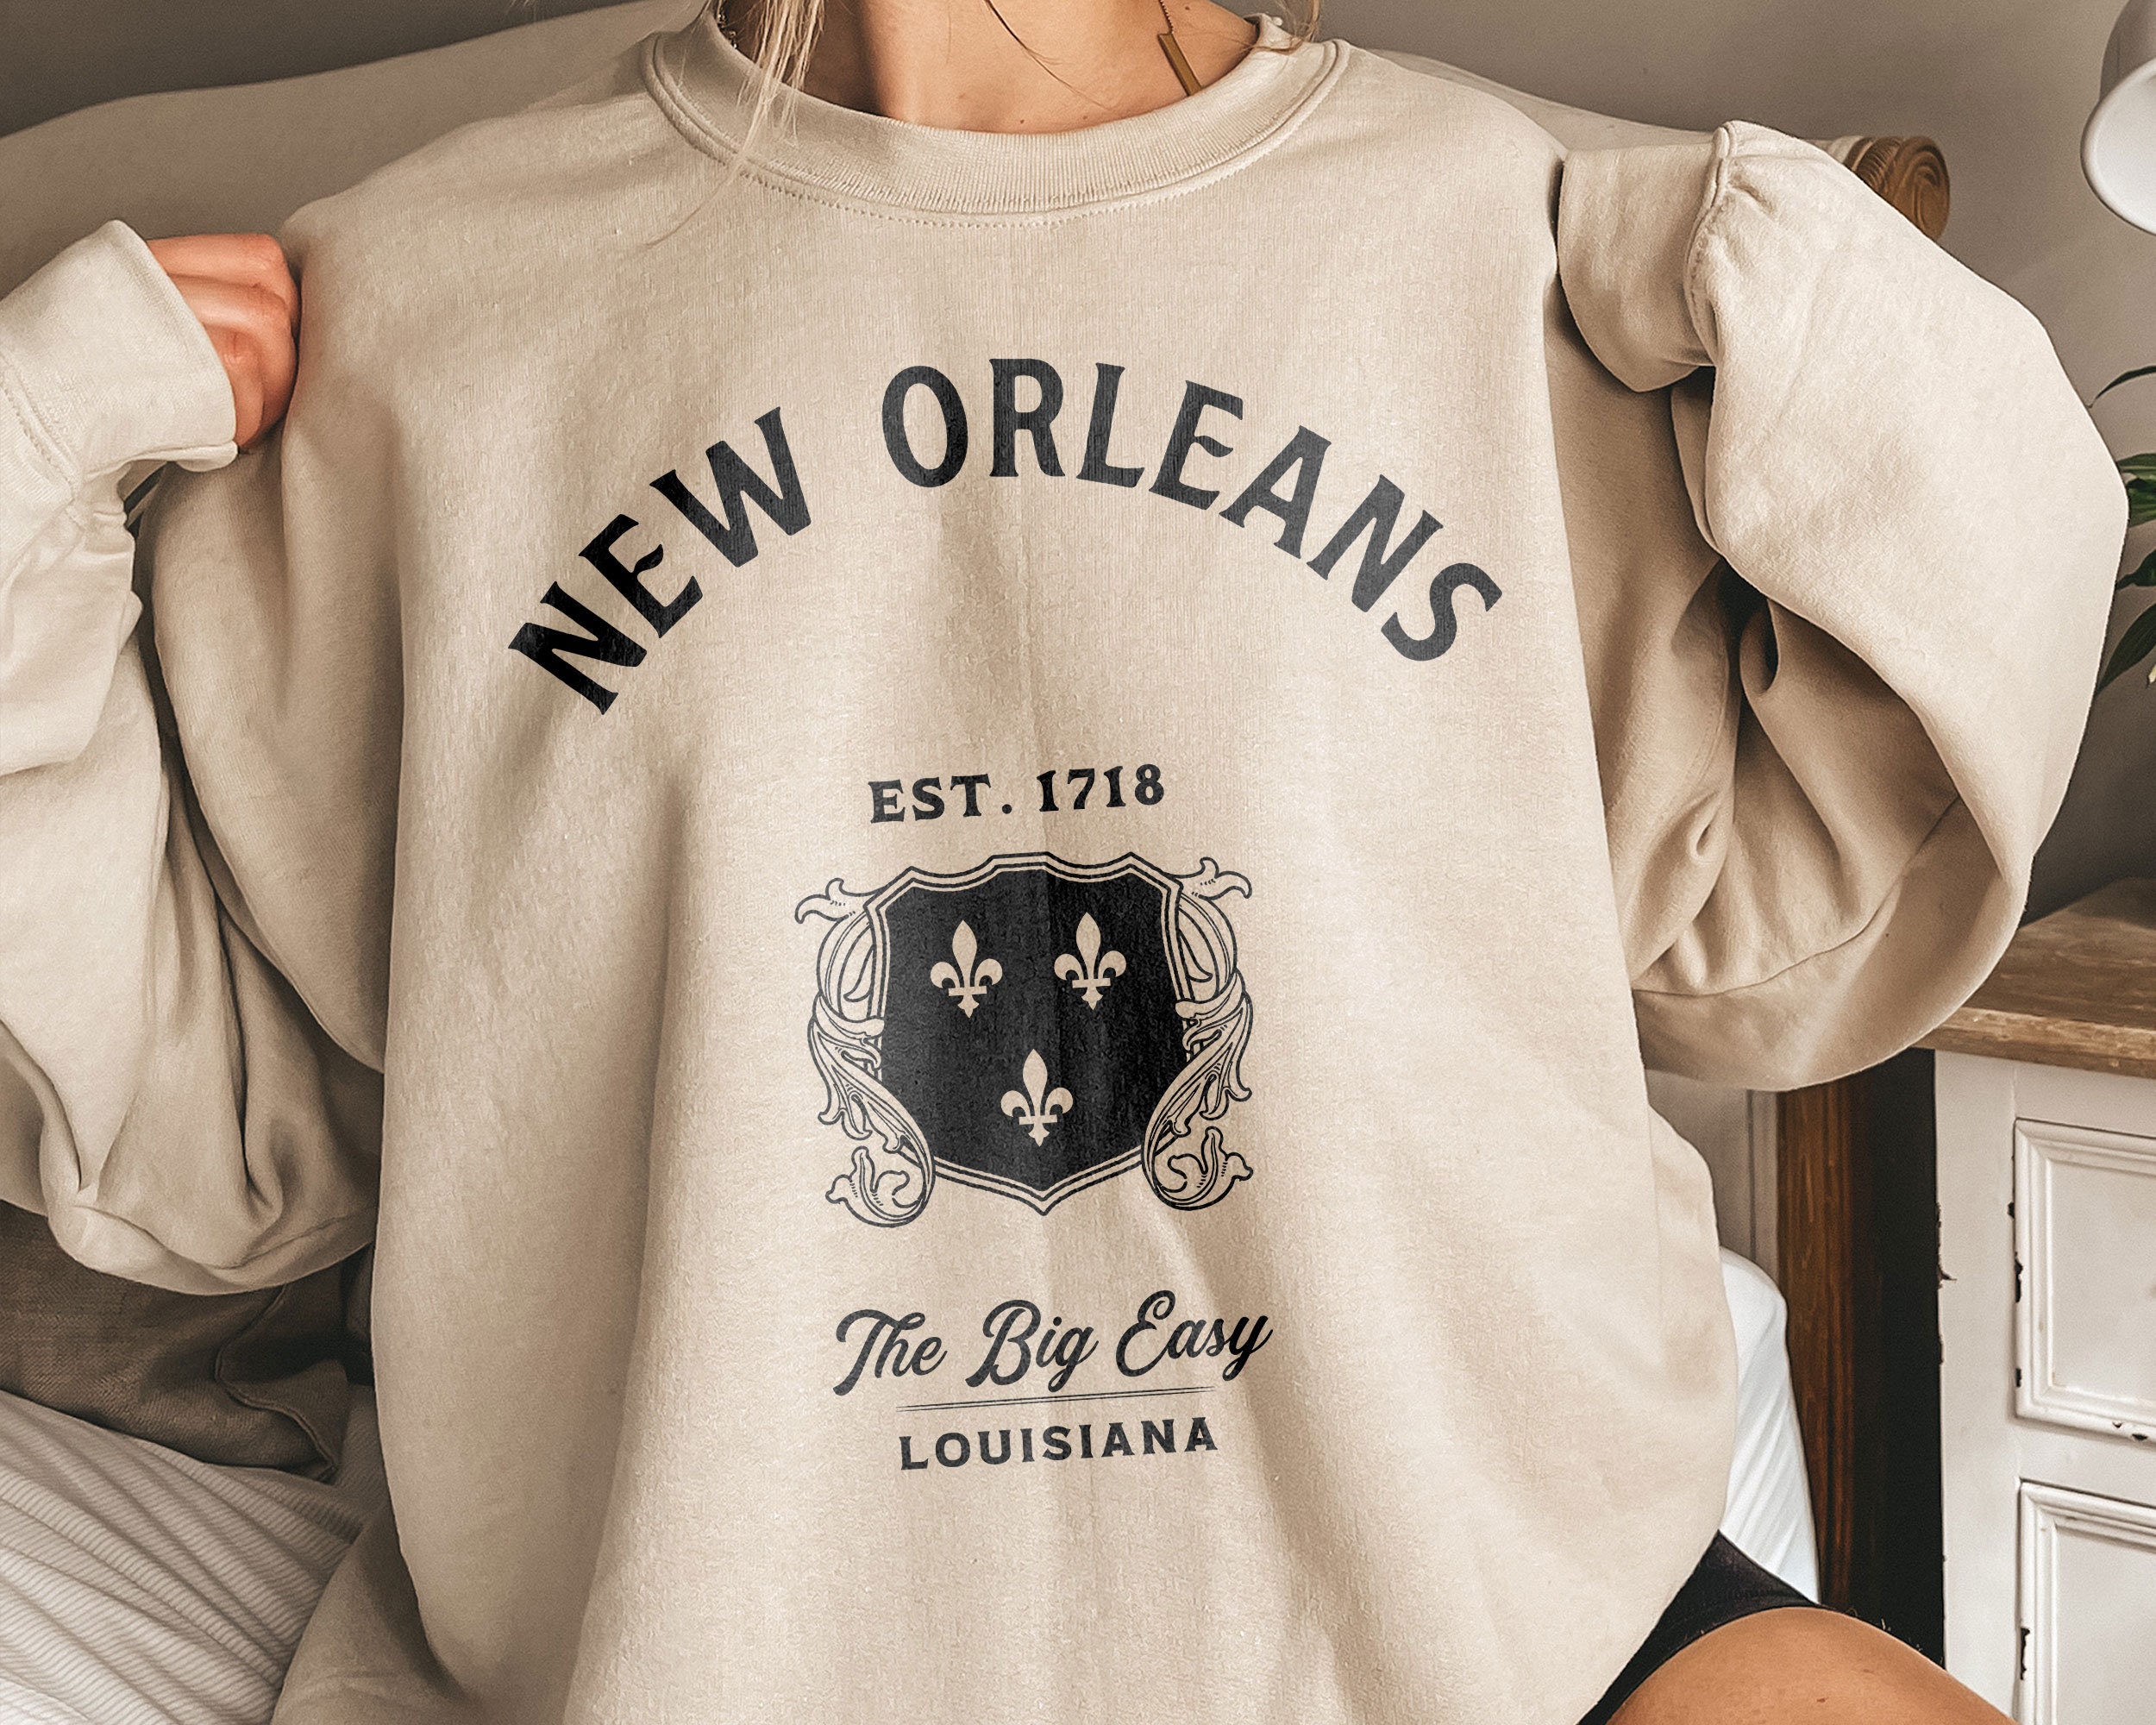 merchfrontier New Orleans, Louisiana The Big Easy Baggy Sweatshirt, Soft and Comfortable Crewneck Pullover Memento, Girls Trip Vacation Travel Souvenir